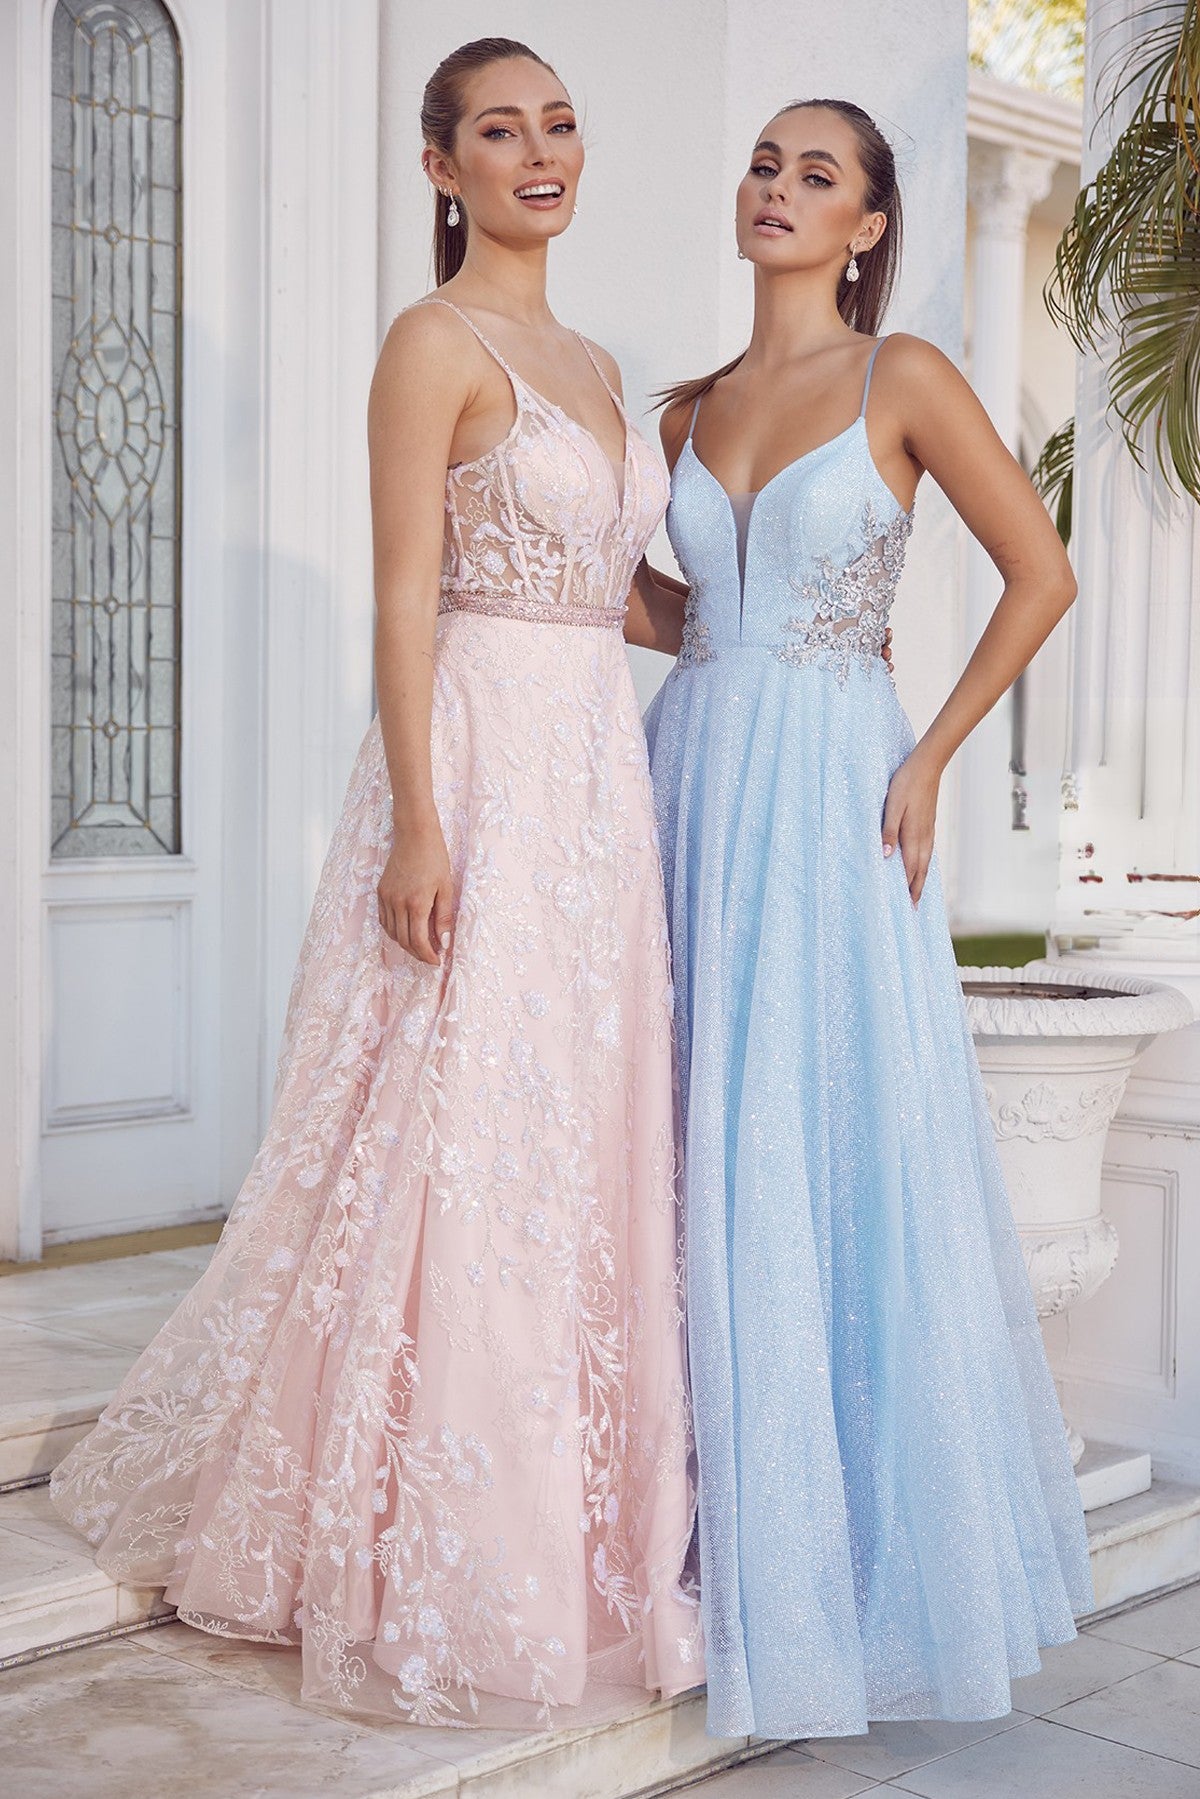 Embellished Glitter Illusion V-Neck Long Prom Dress NXT1033-Prom Dress-smcfashion.com